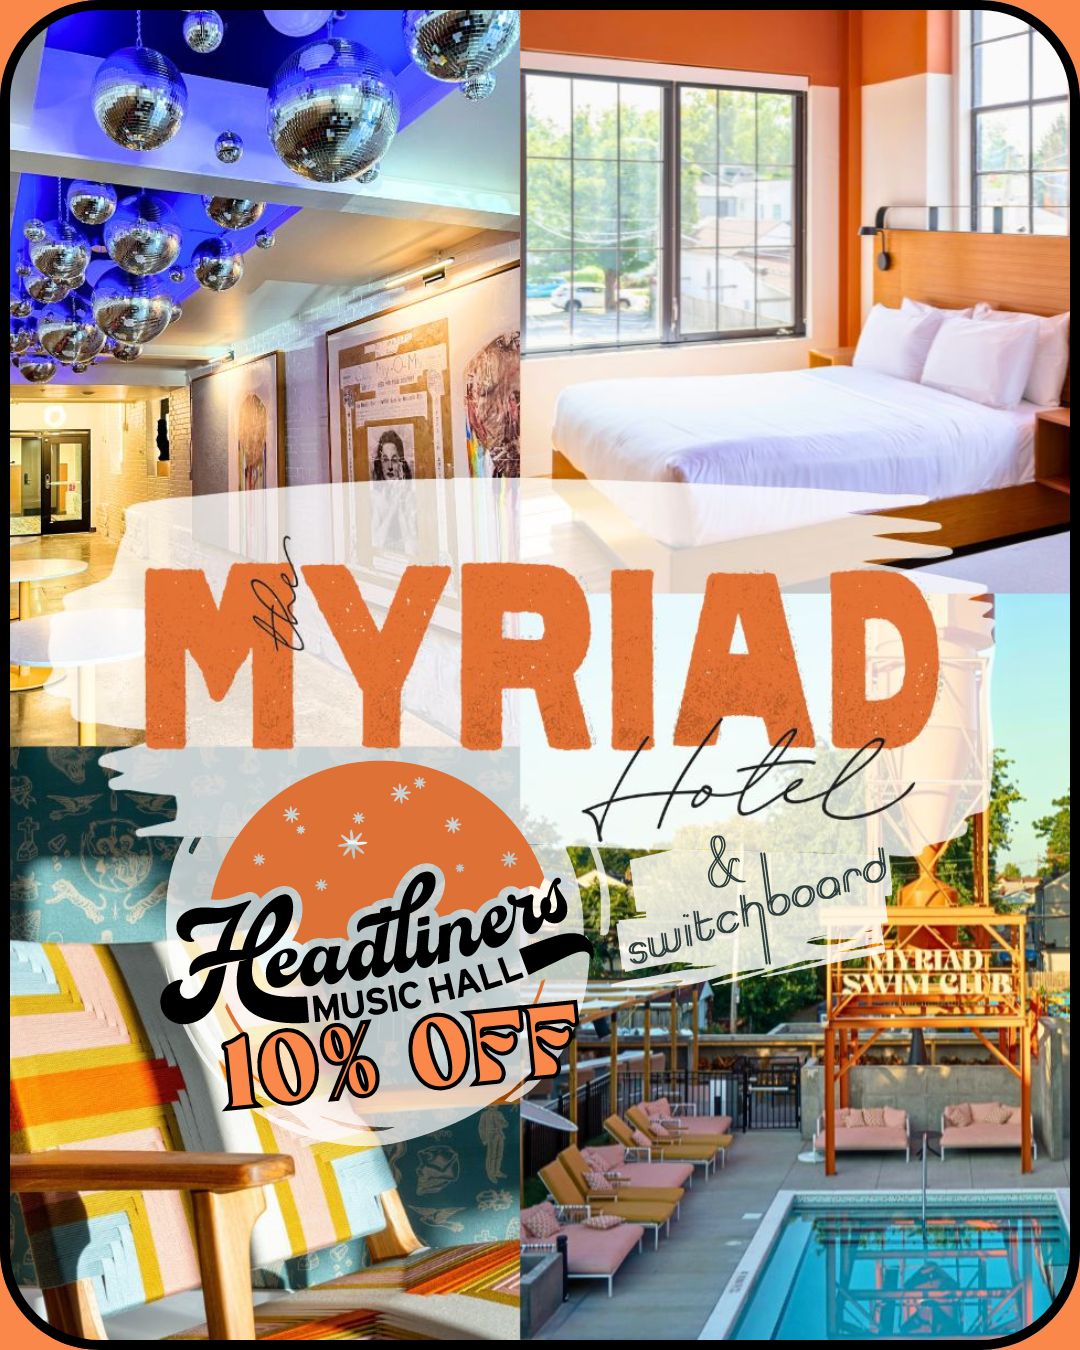 Myriad Hotel and Headliners partnership